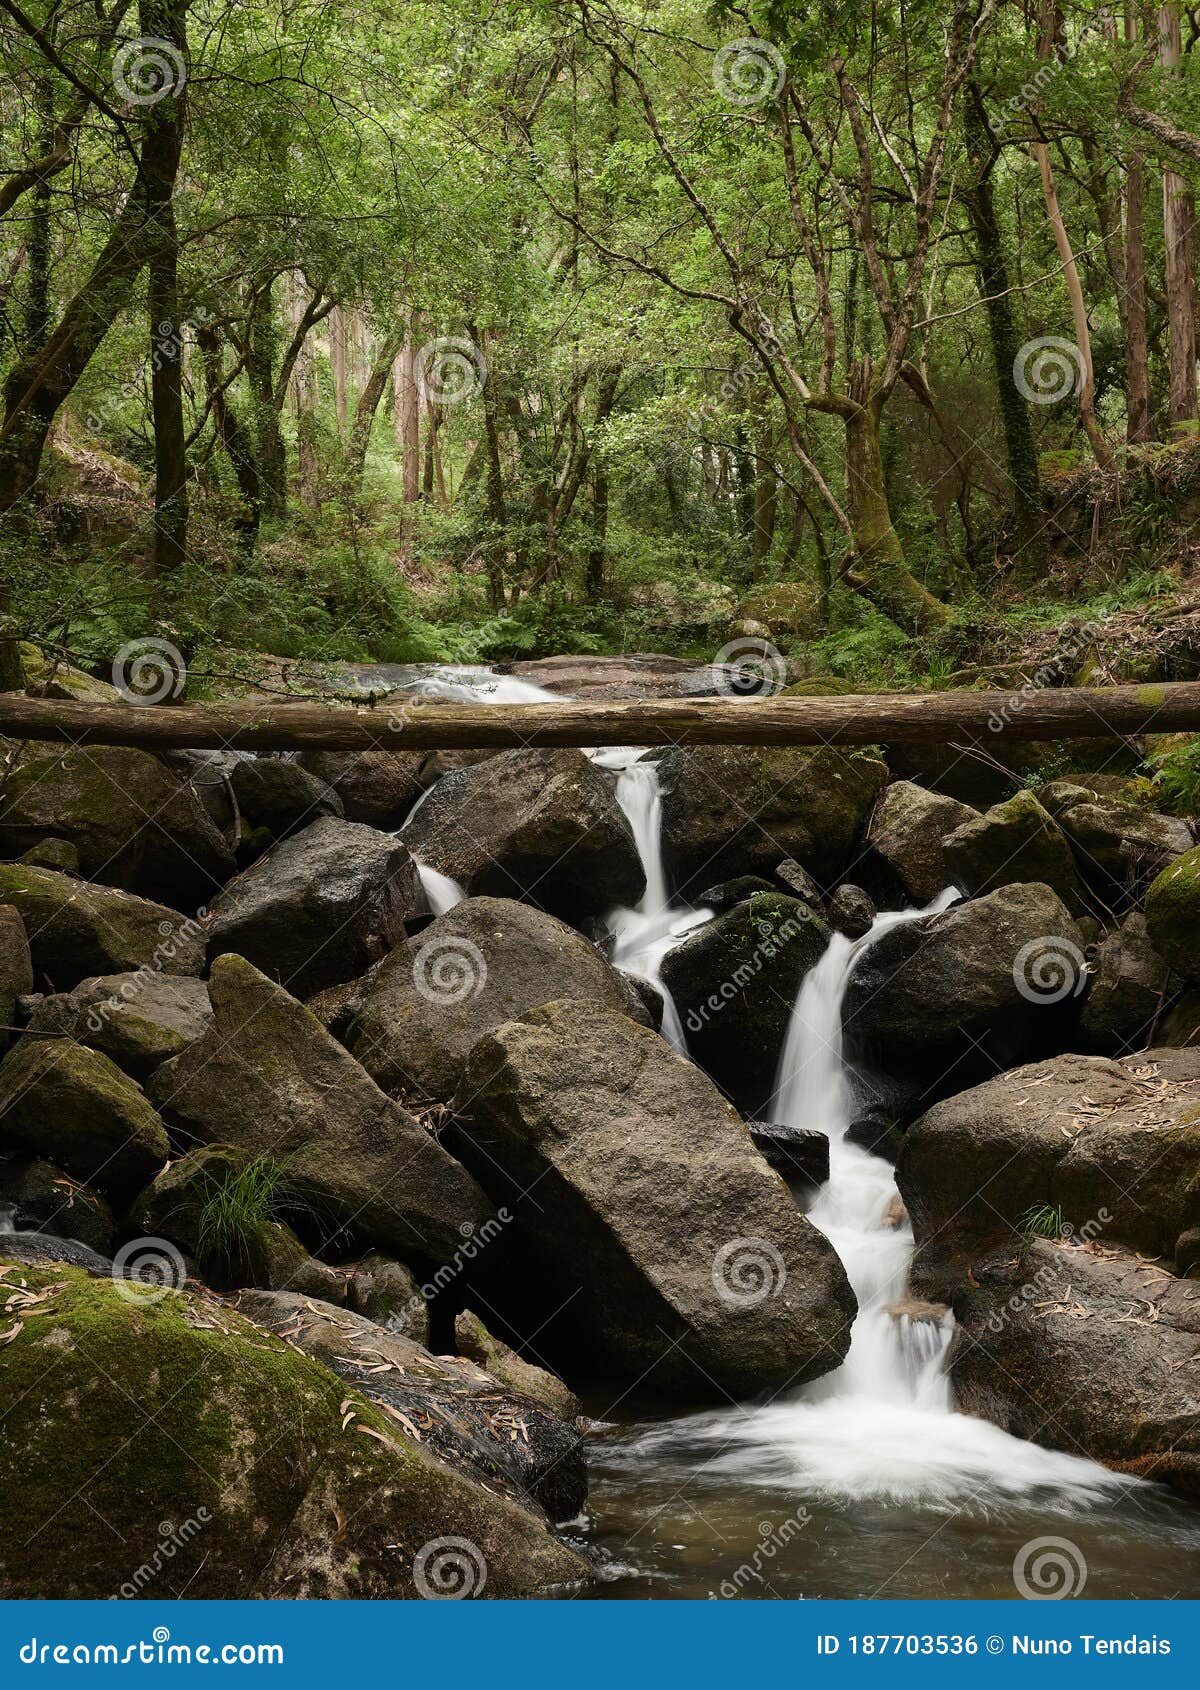 waterfall of river leÃÂ§a in the woods of monte cordova